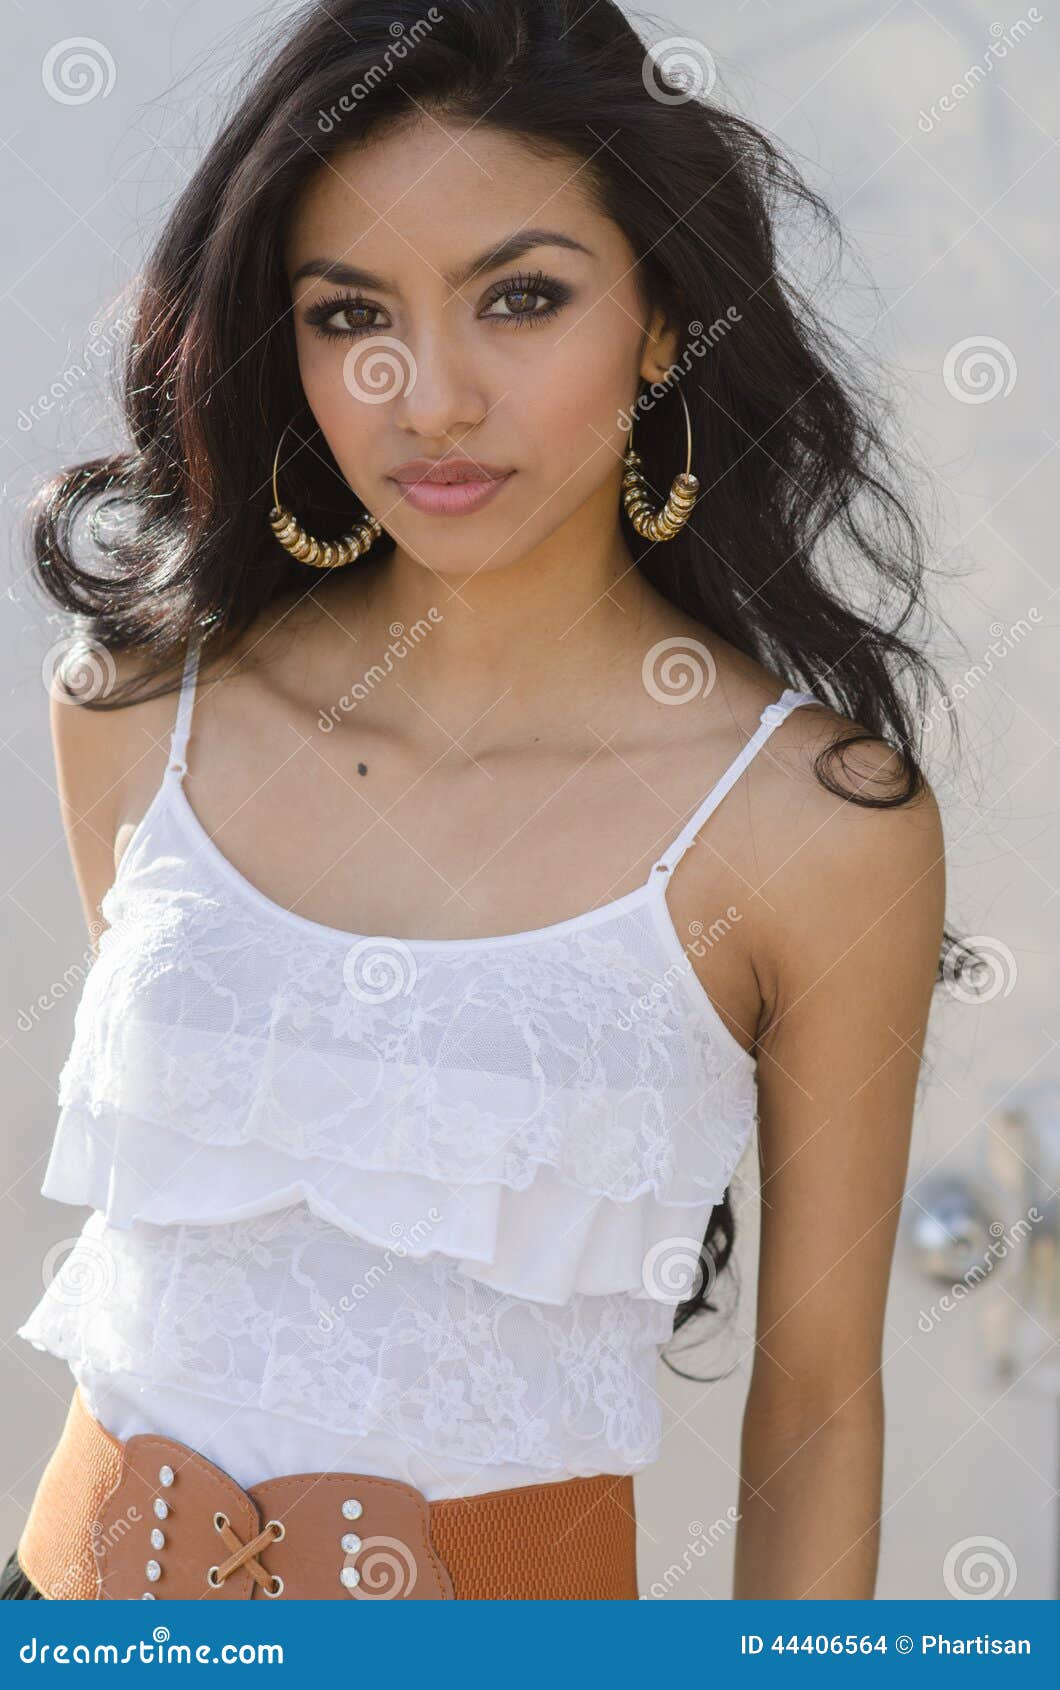 https://thumbs.dreamstime.com/z/beautiful-young-latina-woman-exotic-dark-looks-44406564.jpg